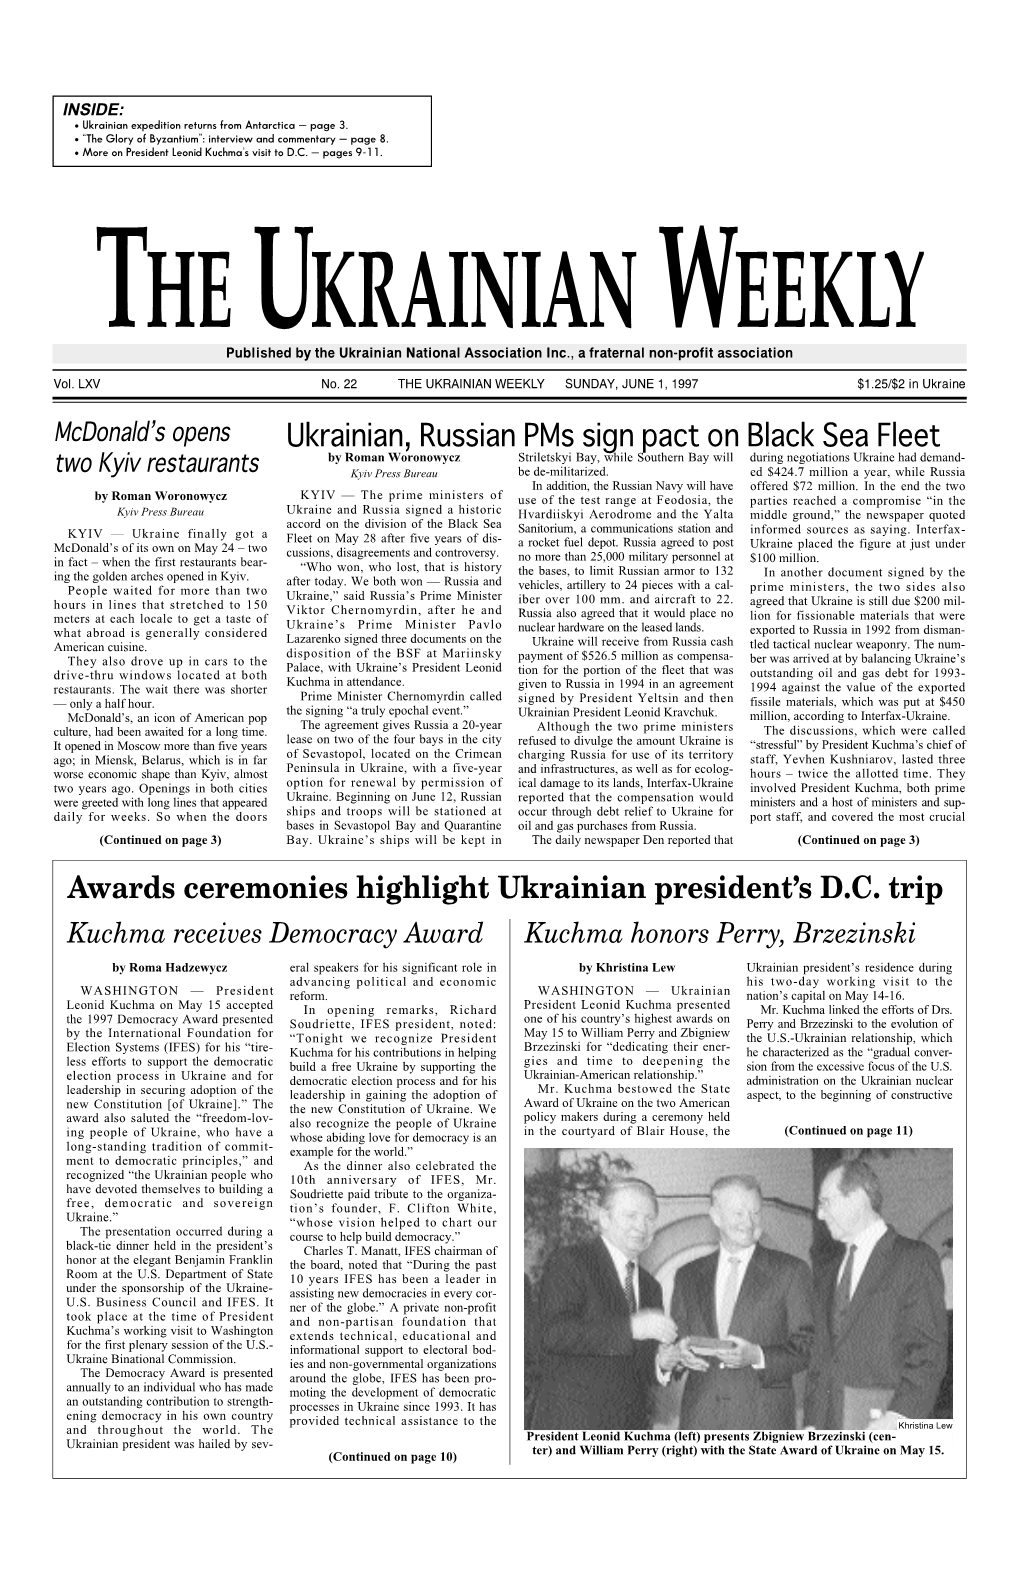 The Ukrainian Weekly 1997, No.22